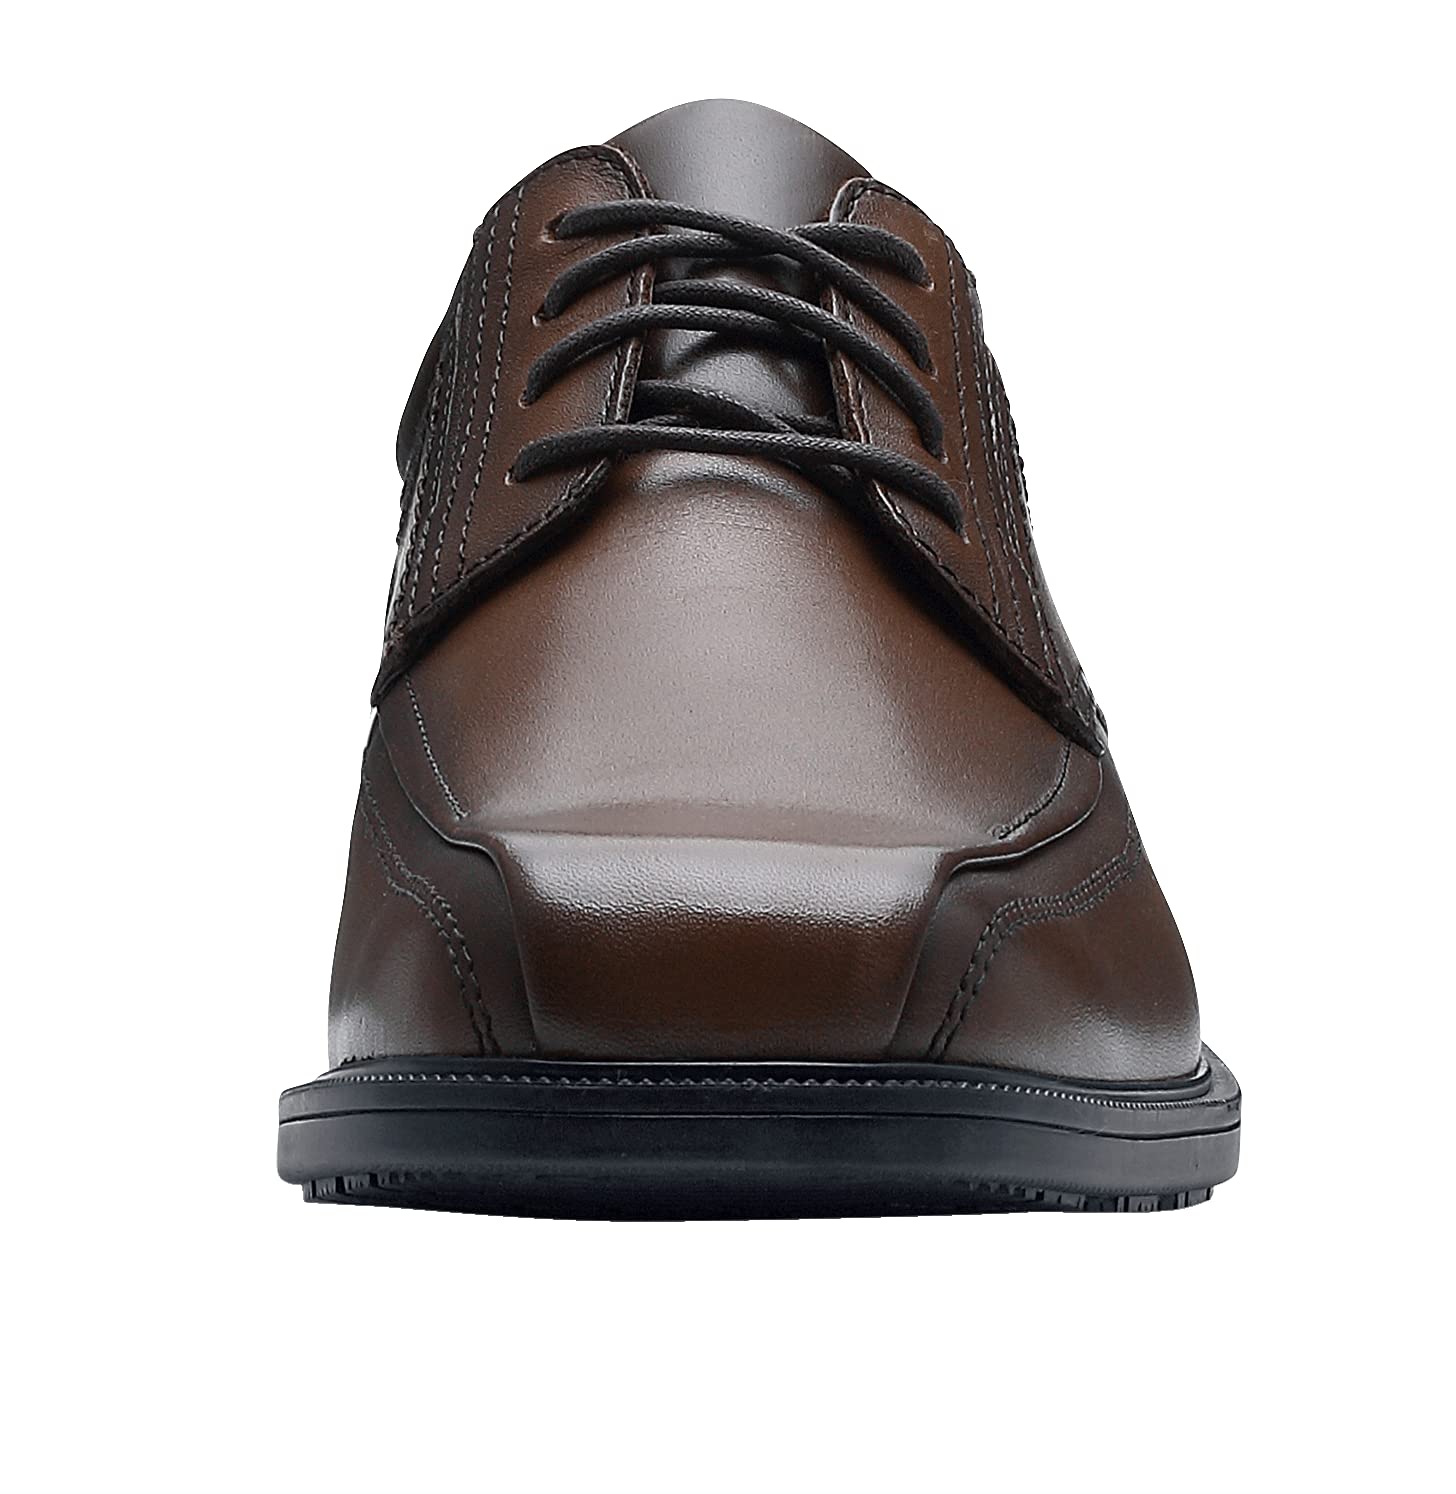 Shoes for Crews Dress Shoes for Men, Men’s Oxfords, Zapatos De Vestir para Hombre, Slip Resistant, Safety, Brown or Black